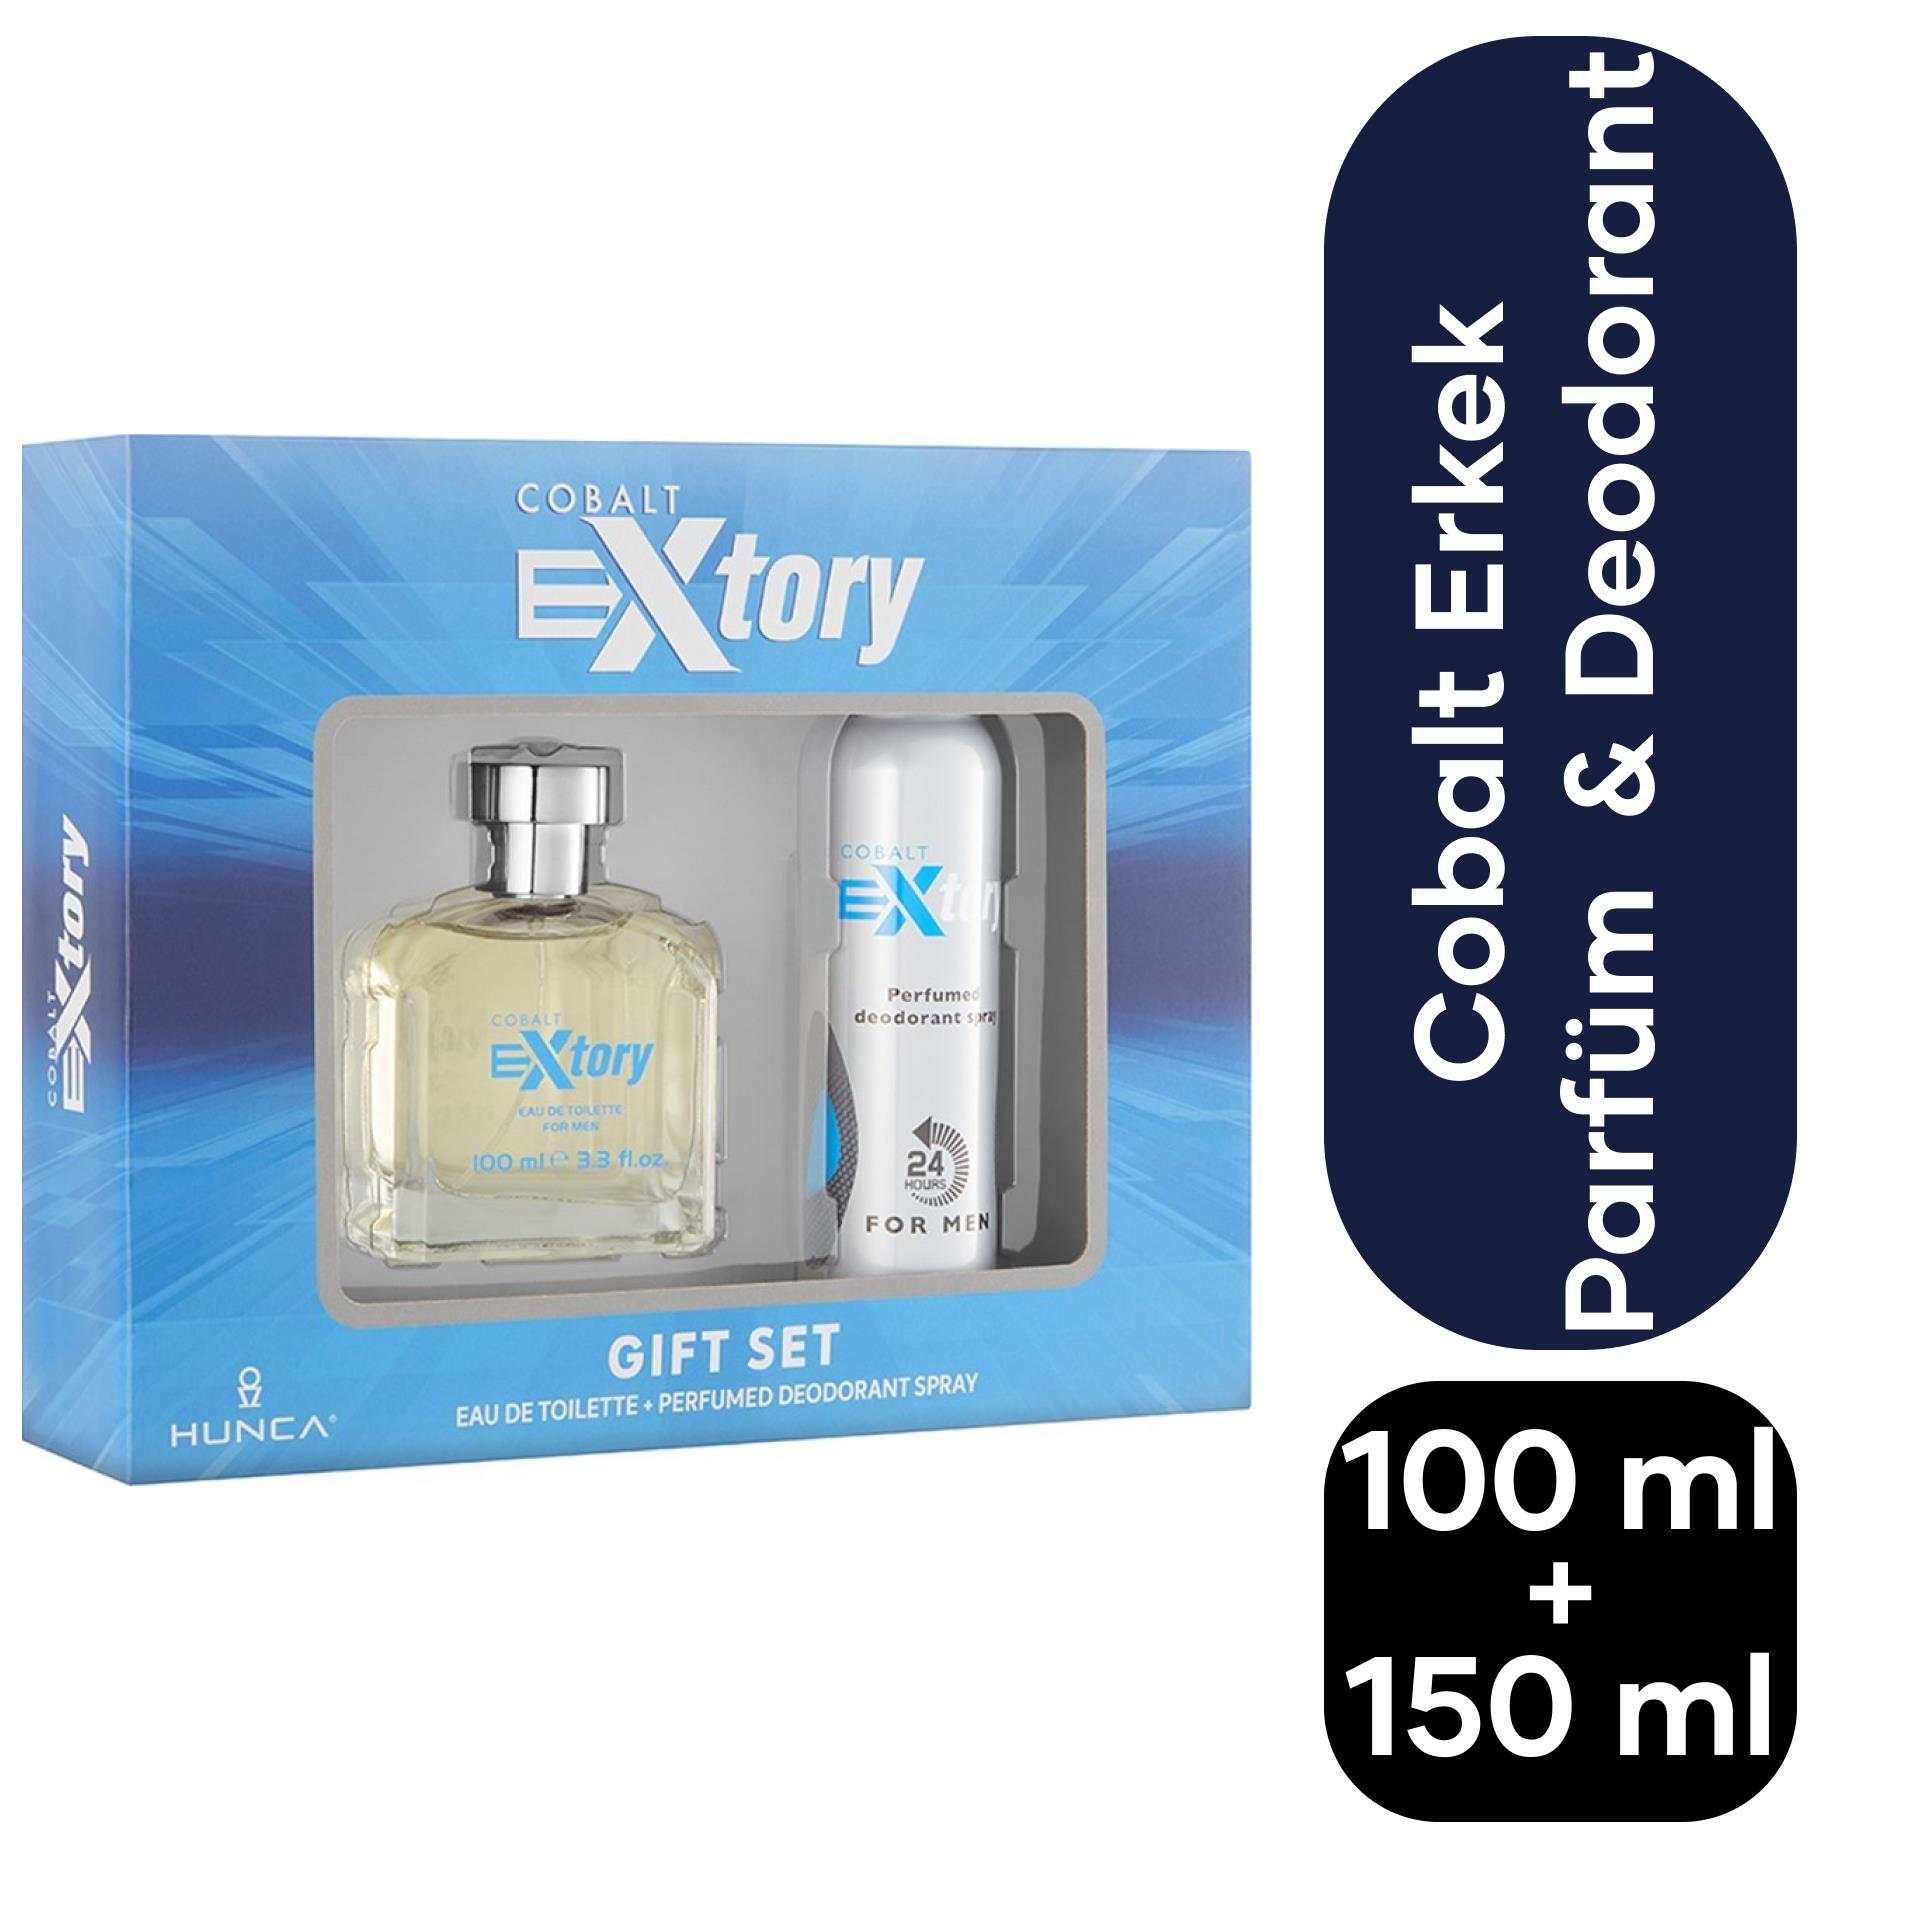 Extory Cobalt Erkek Parfüm Edt 100 ml + 150 ml Deodorant